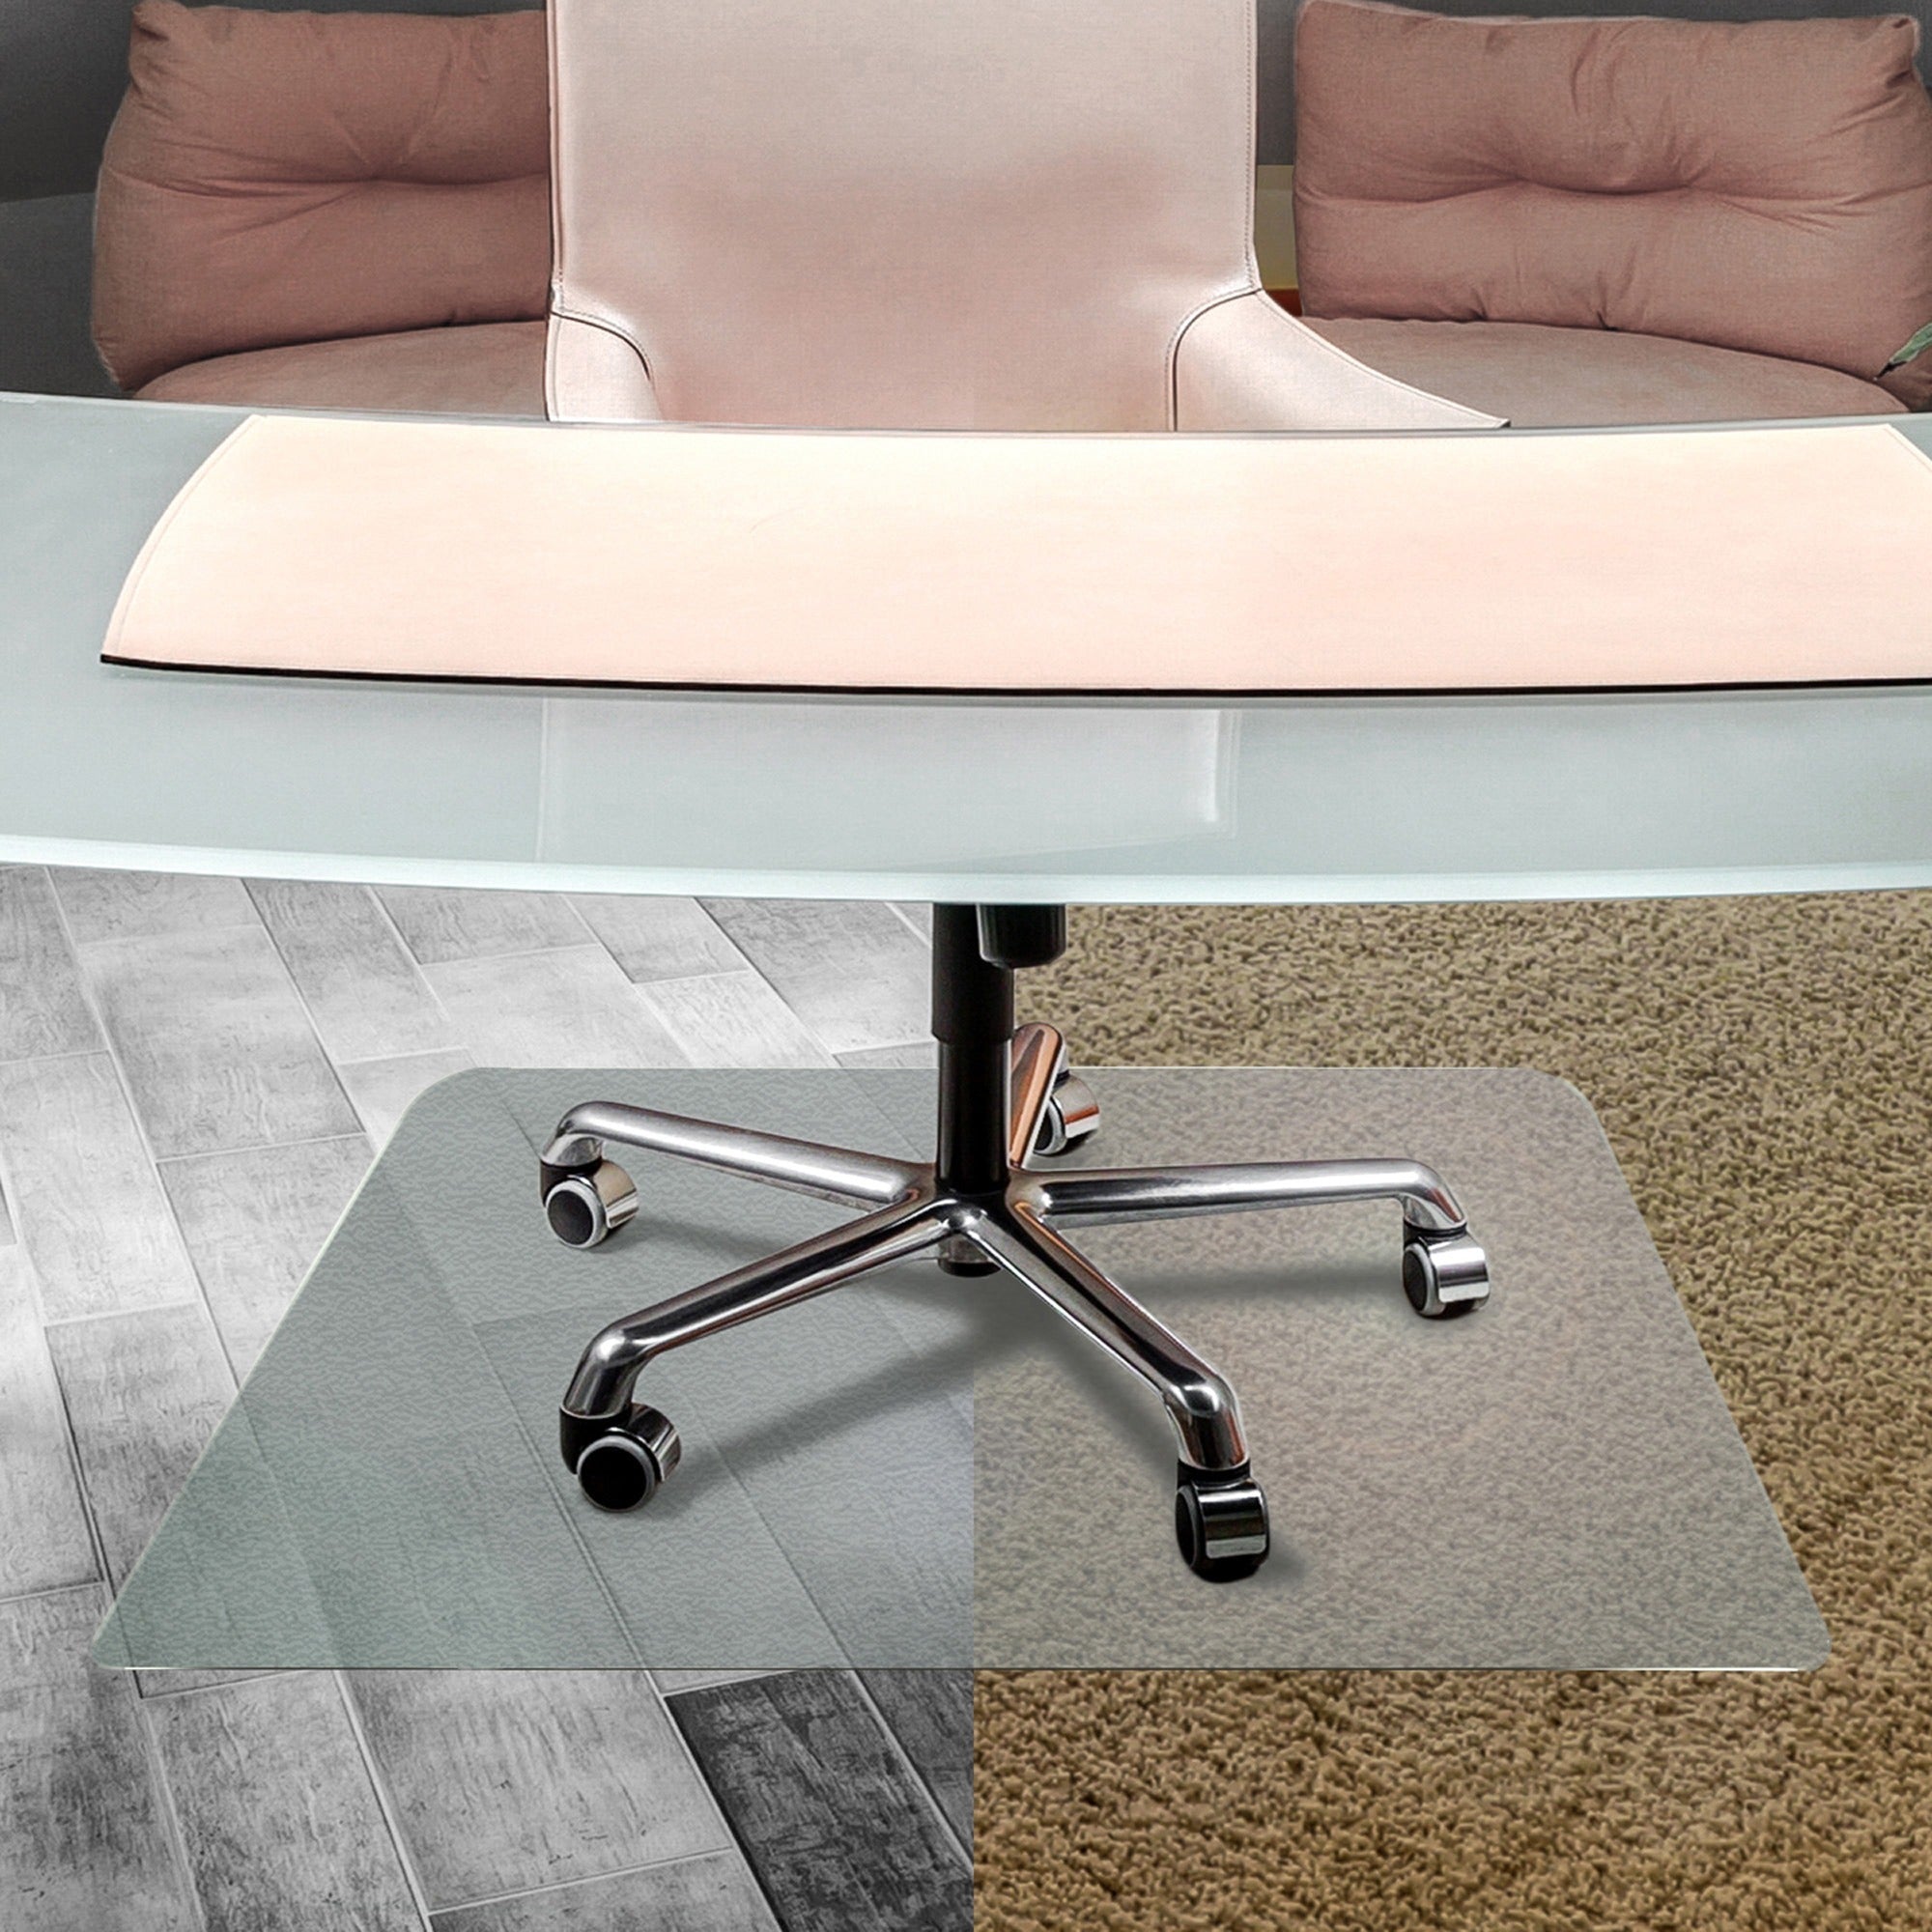 Cleartex Unomat Anti-Slip Rectangular Chair Mat Hard Floors and Carpet Tiles - 48" x 53" - Clear Rectangular Anti-Slip Polycarbonate Chair Mat for Hard Floors and Carpet Tiles - 53" L x 48" W x 0.075" D - 